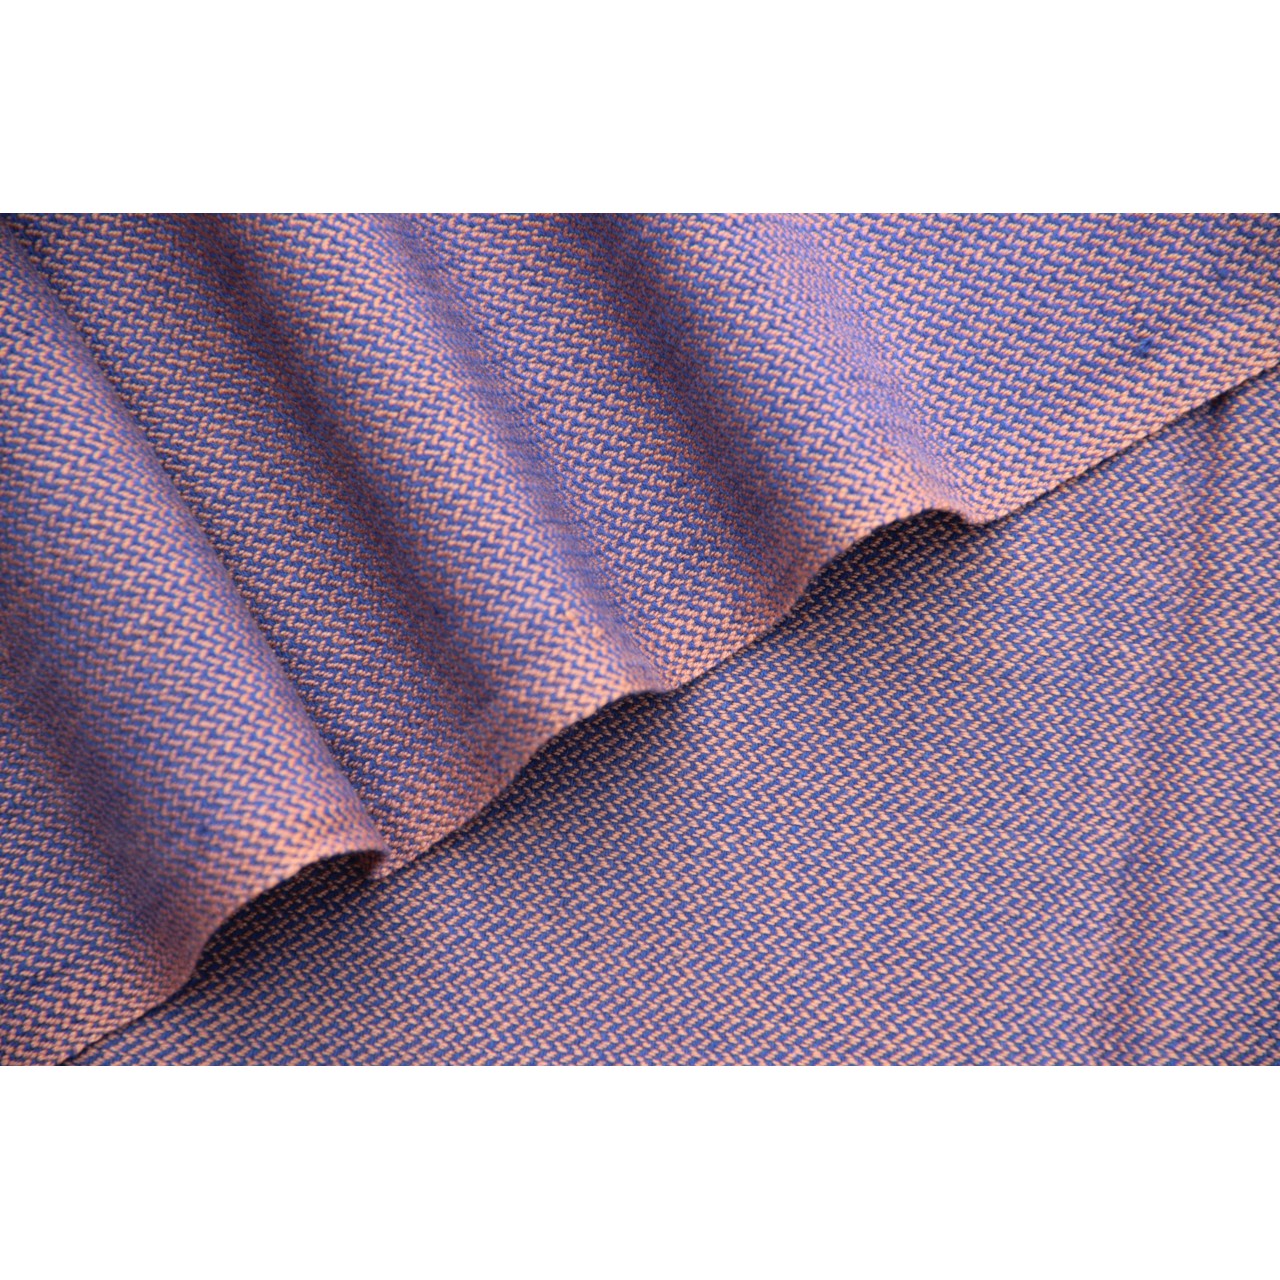 (172) Cotton Azo free dyed yardage from Chhattisgarh - Saffron, indigo